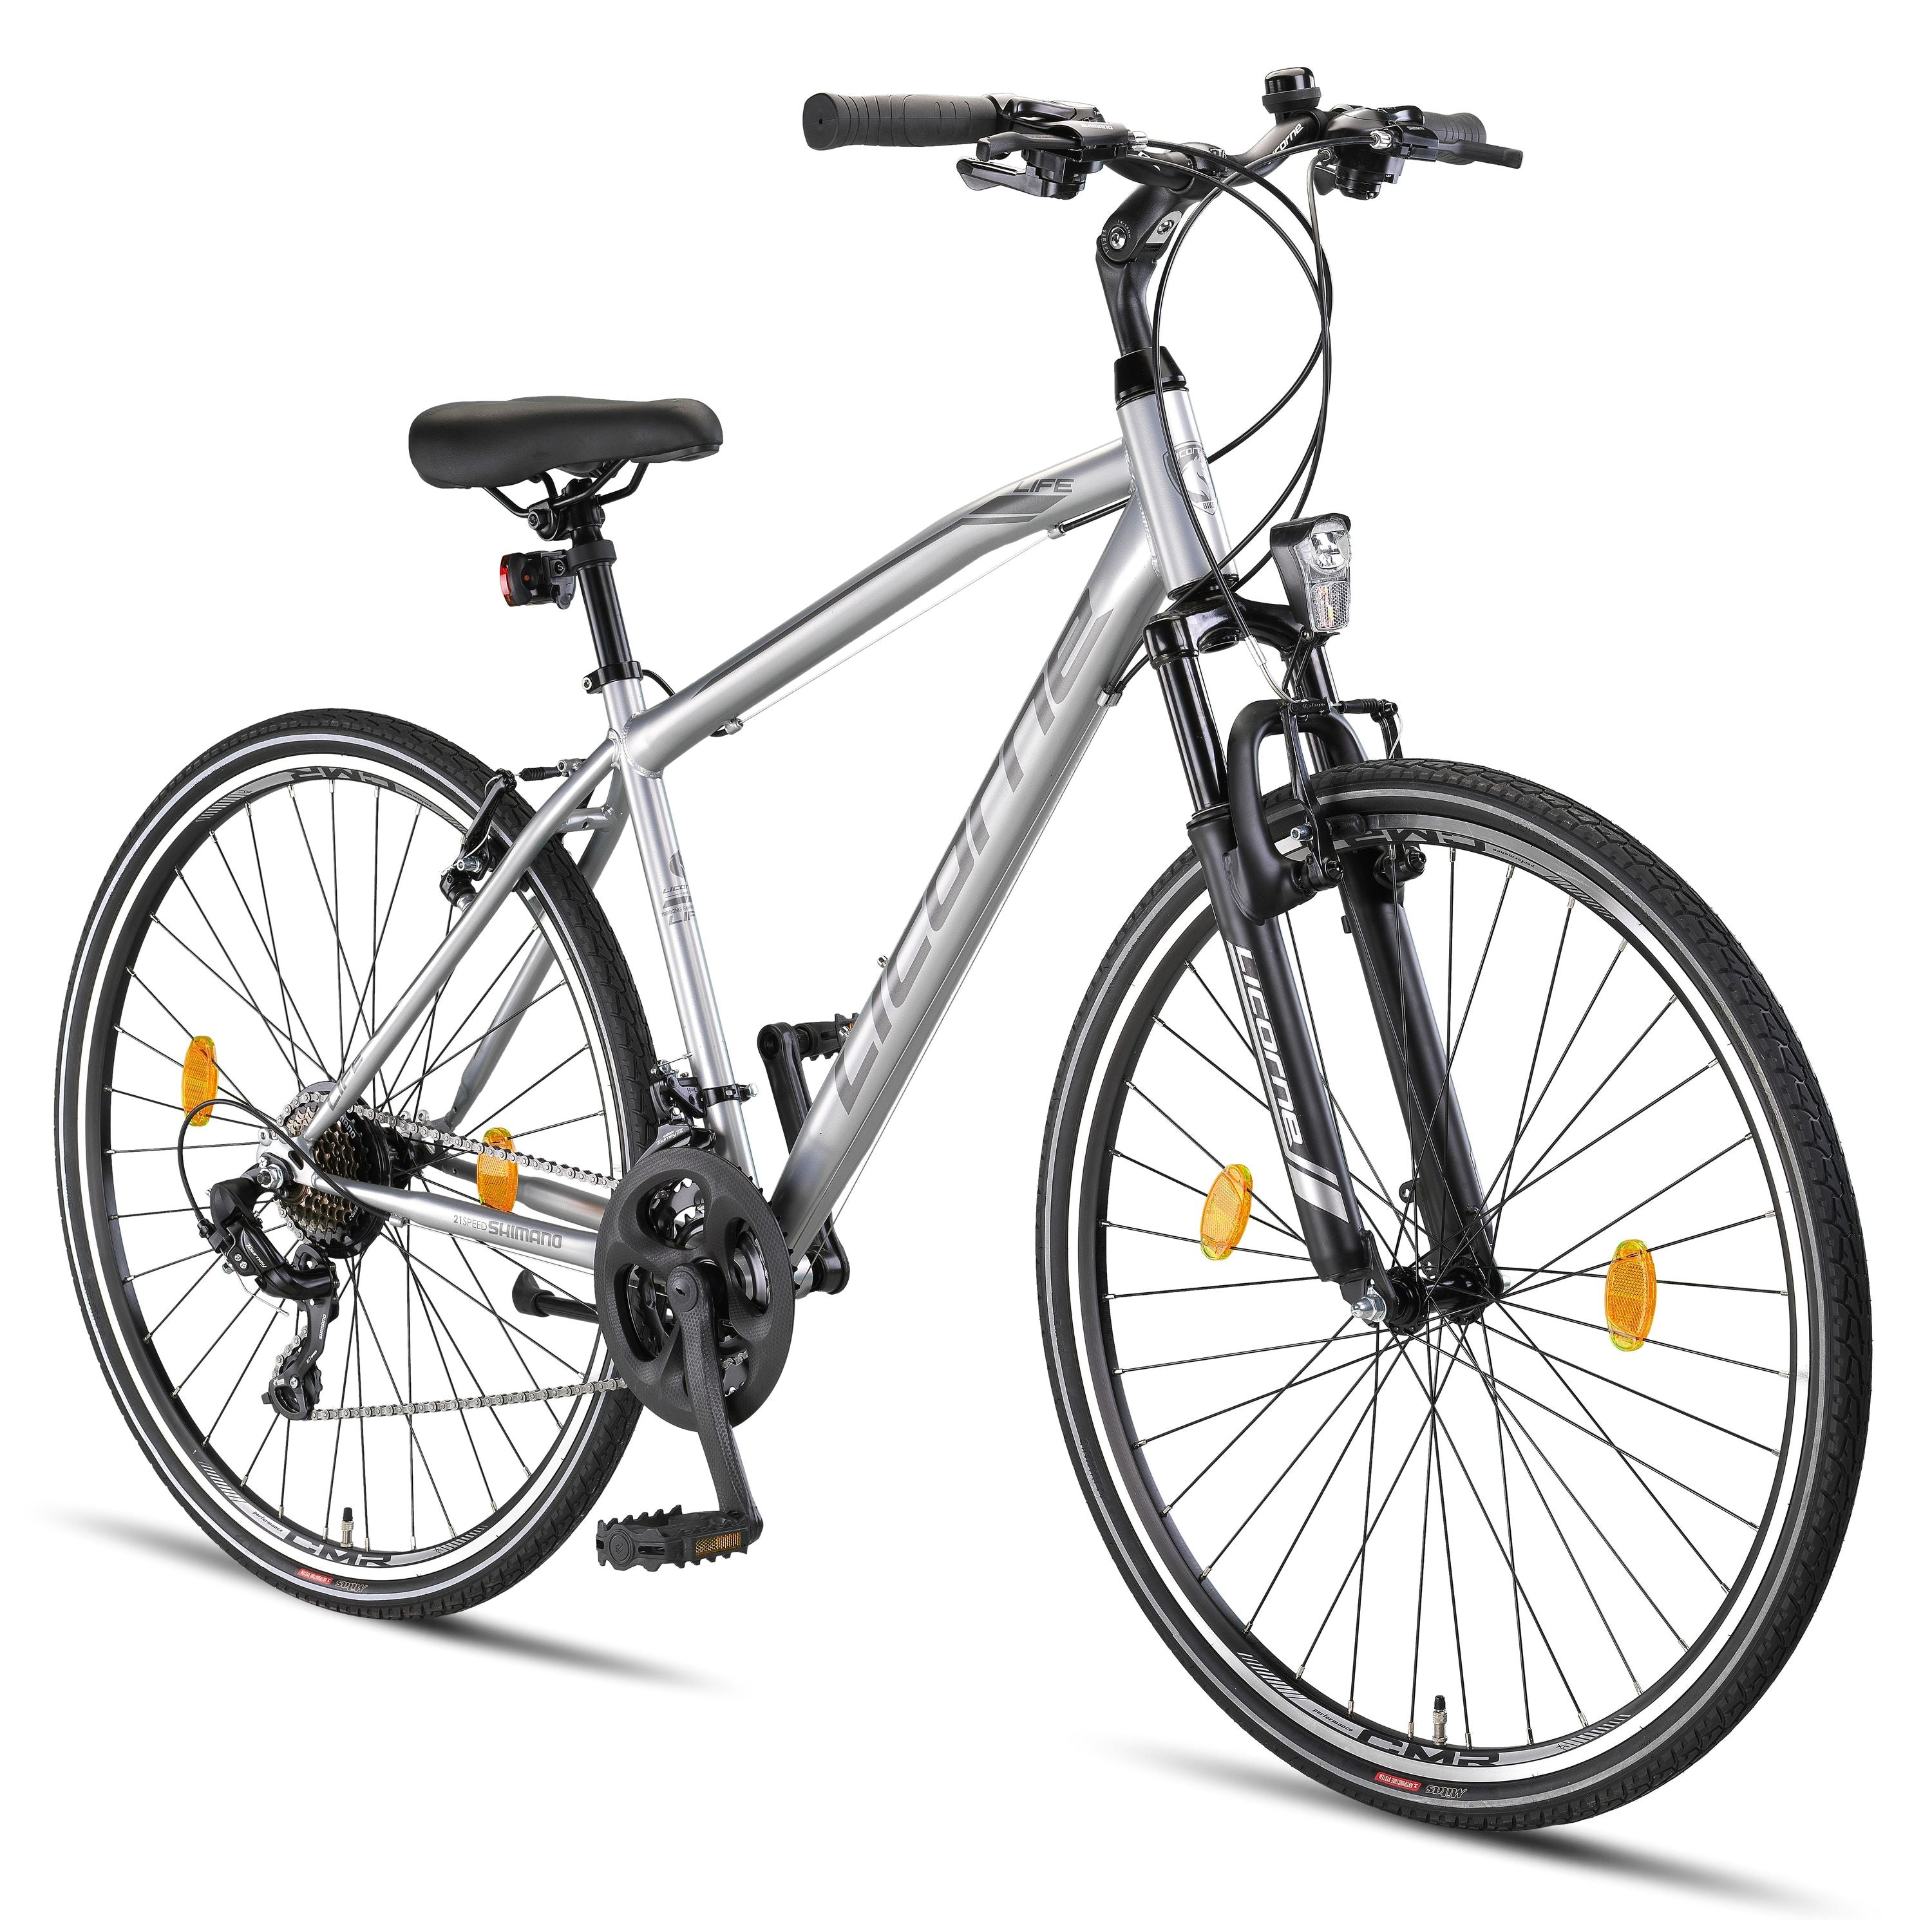 Licorne Bike Life M-V Premium Trekking Bike in 28 inch - Bicycle for boys, girls, ladies and men - Shimano 21 speed gear - men's bike - boys bike